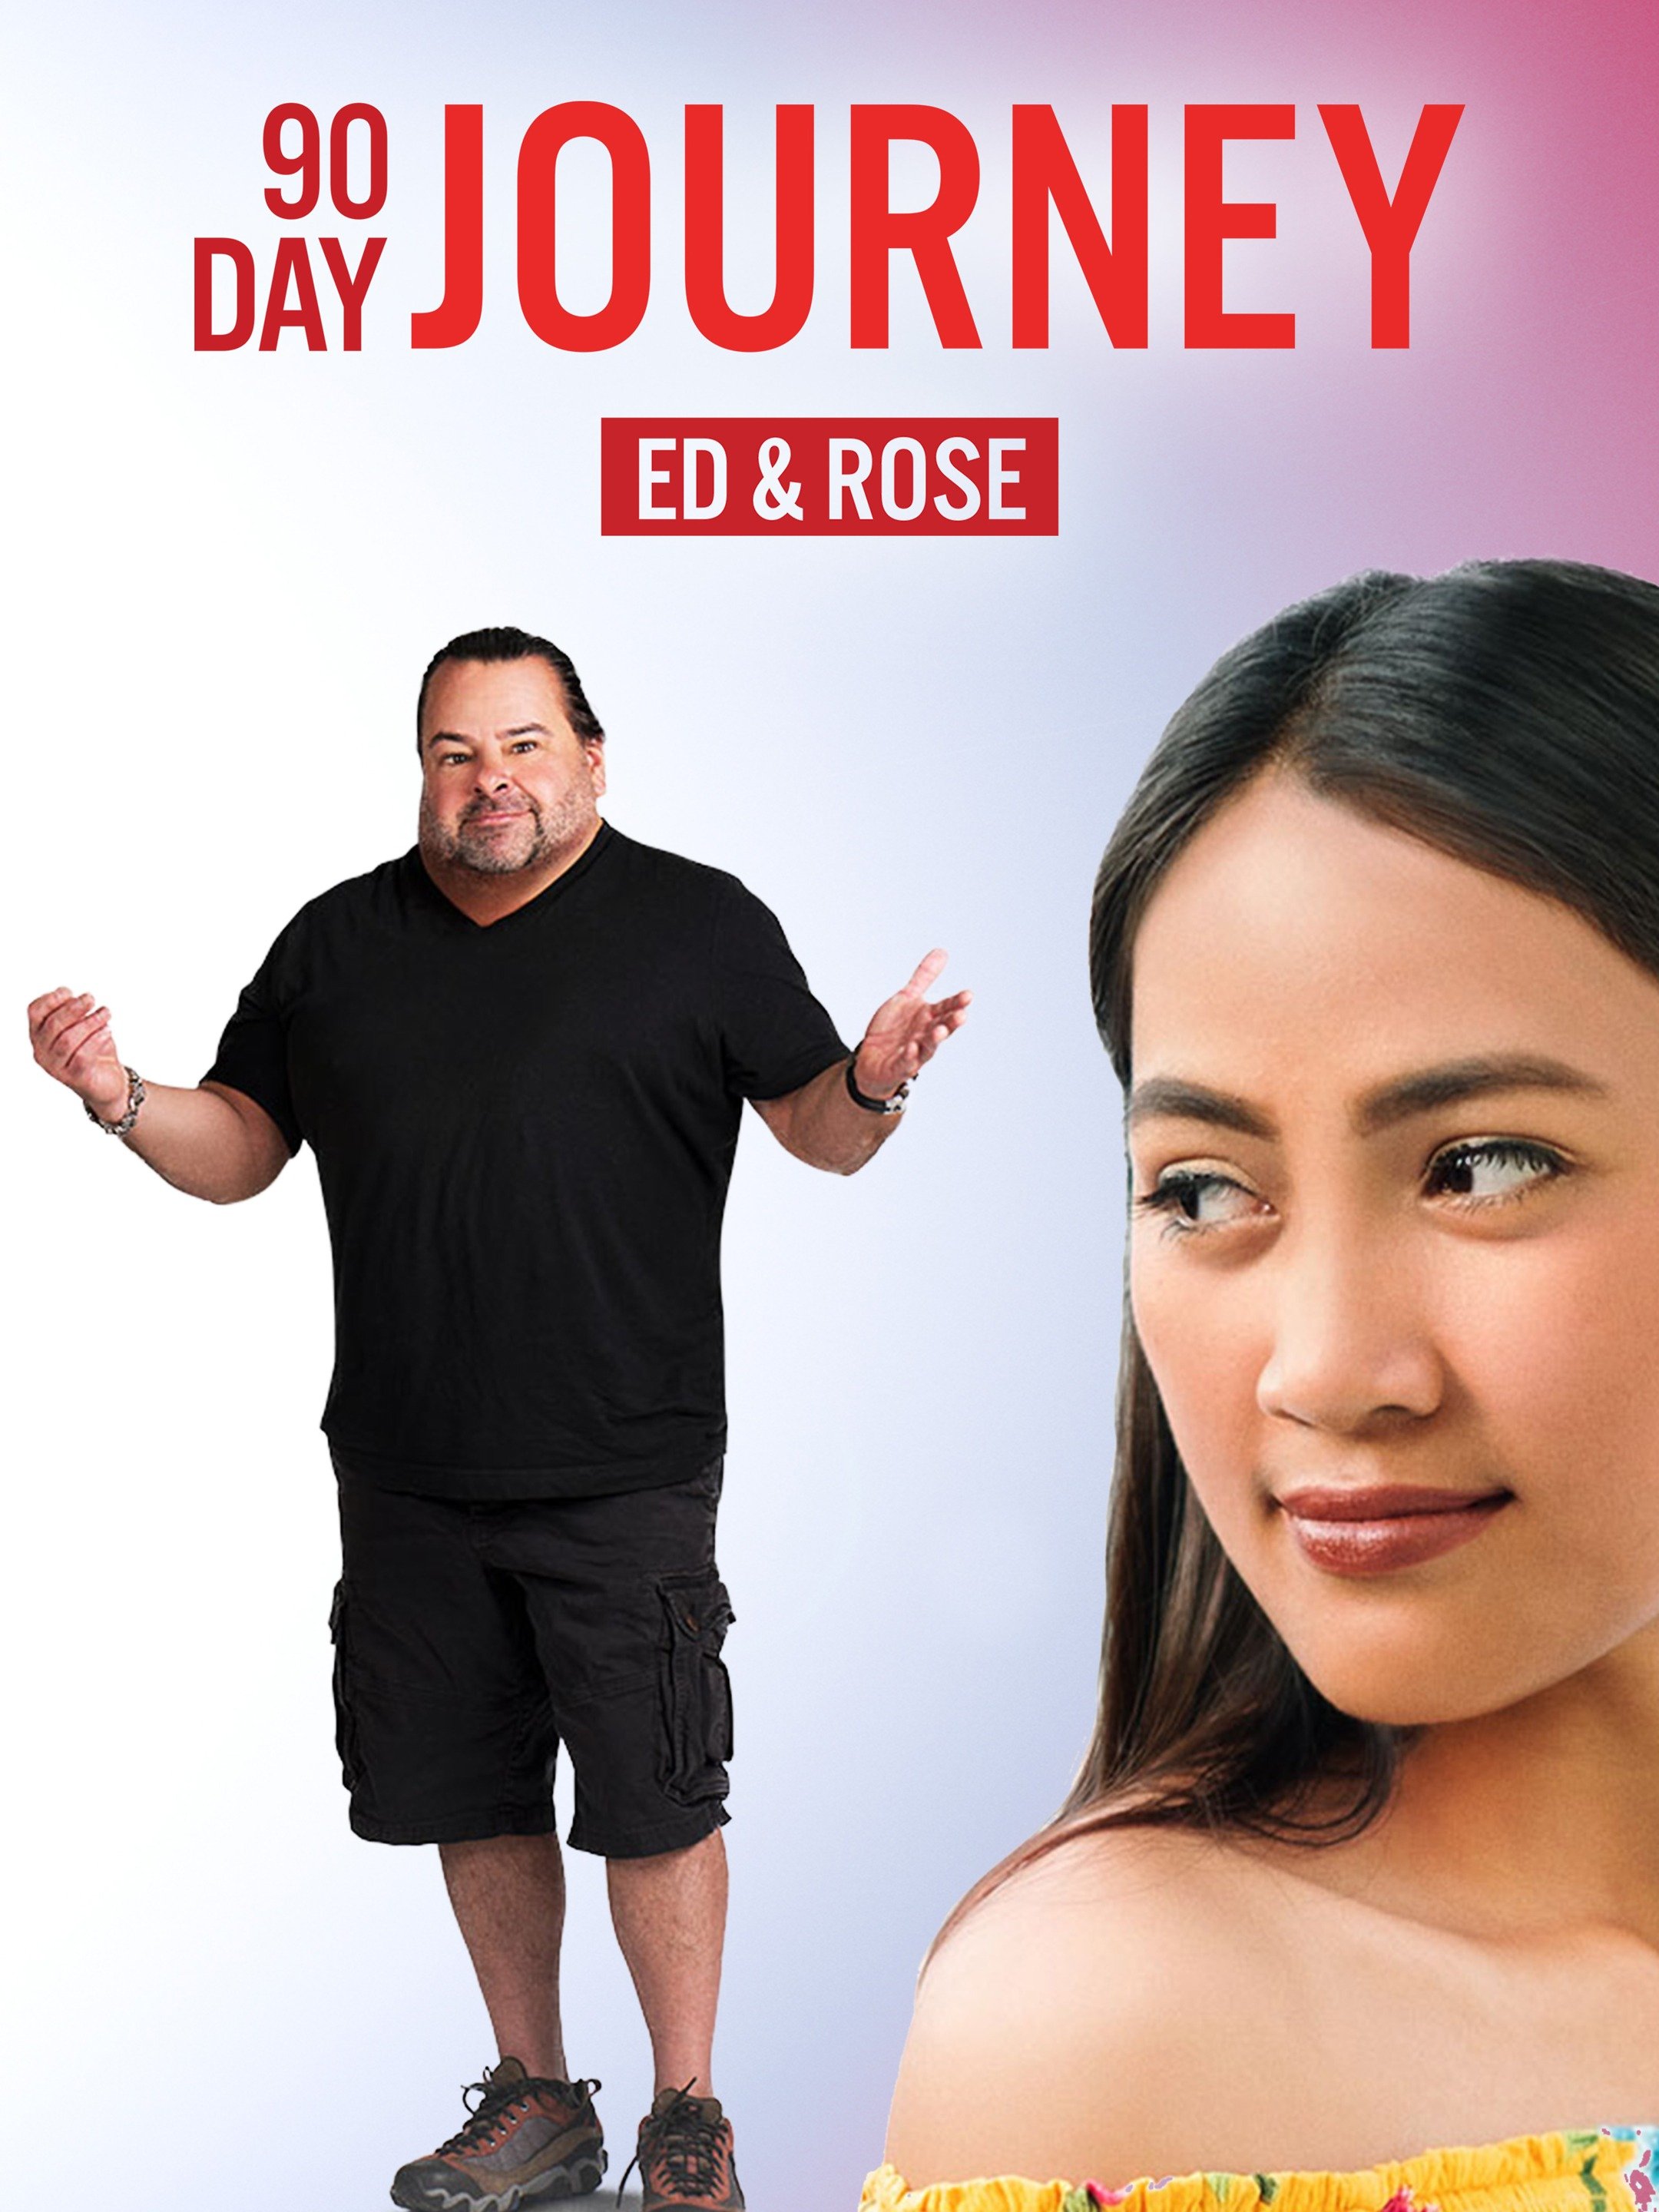 90 day journey ed & rose episodes